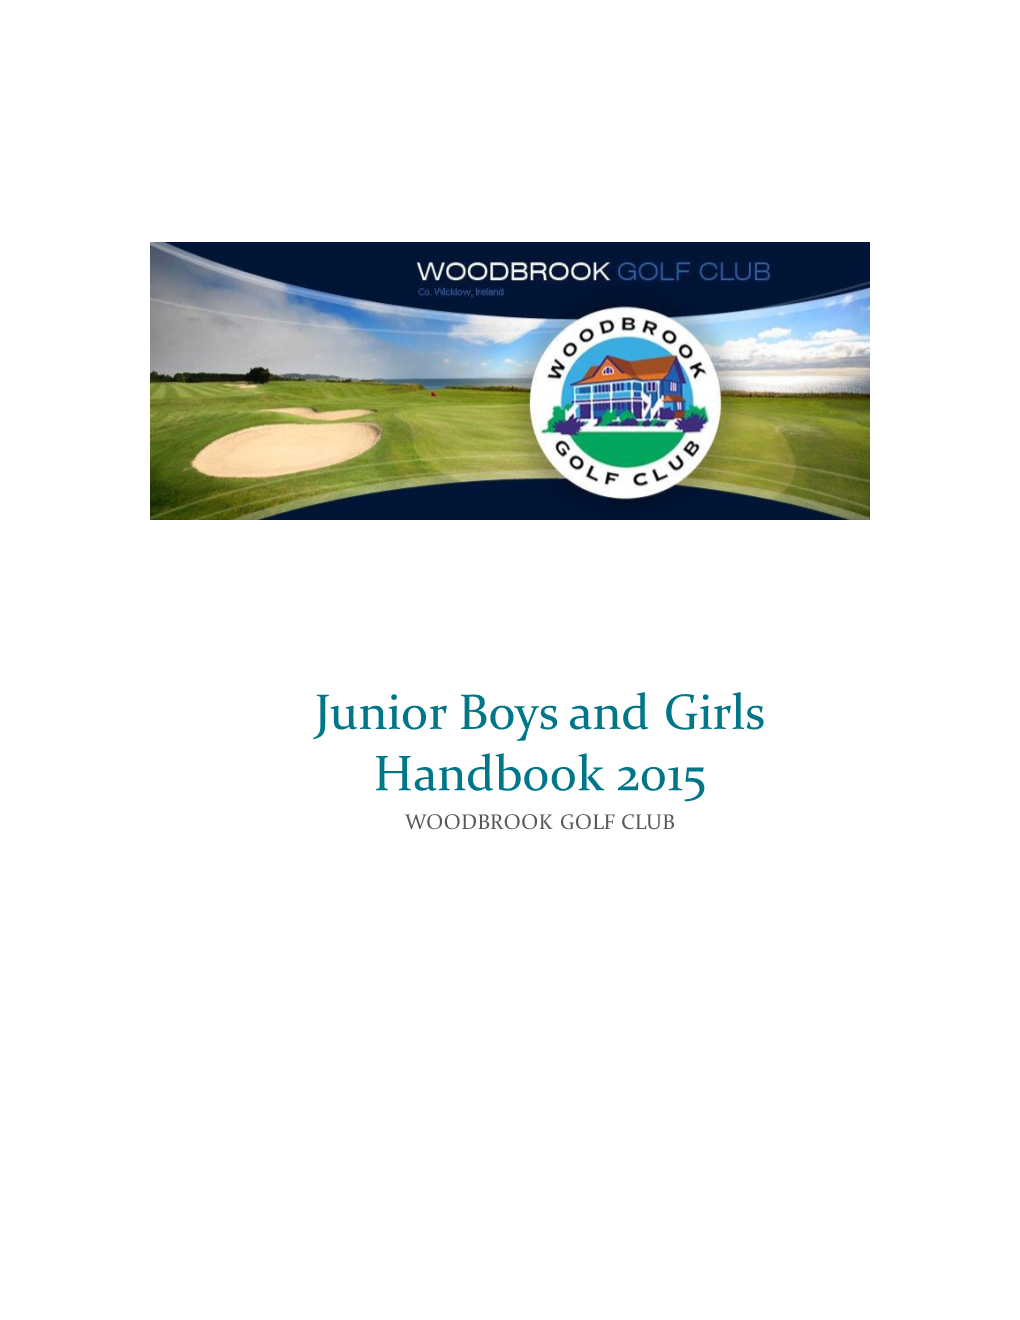 Junior Boys and Girls Handbook 2015 WOODBROOK GOLF CLUB Introduction